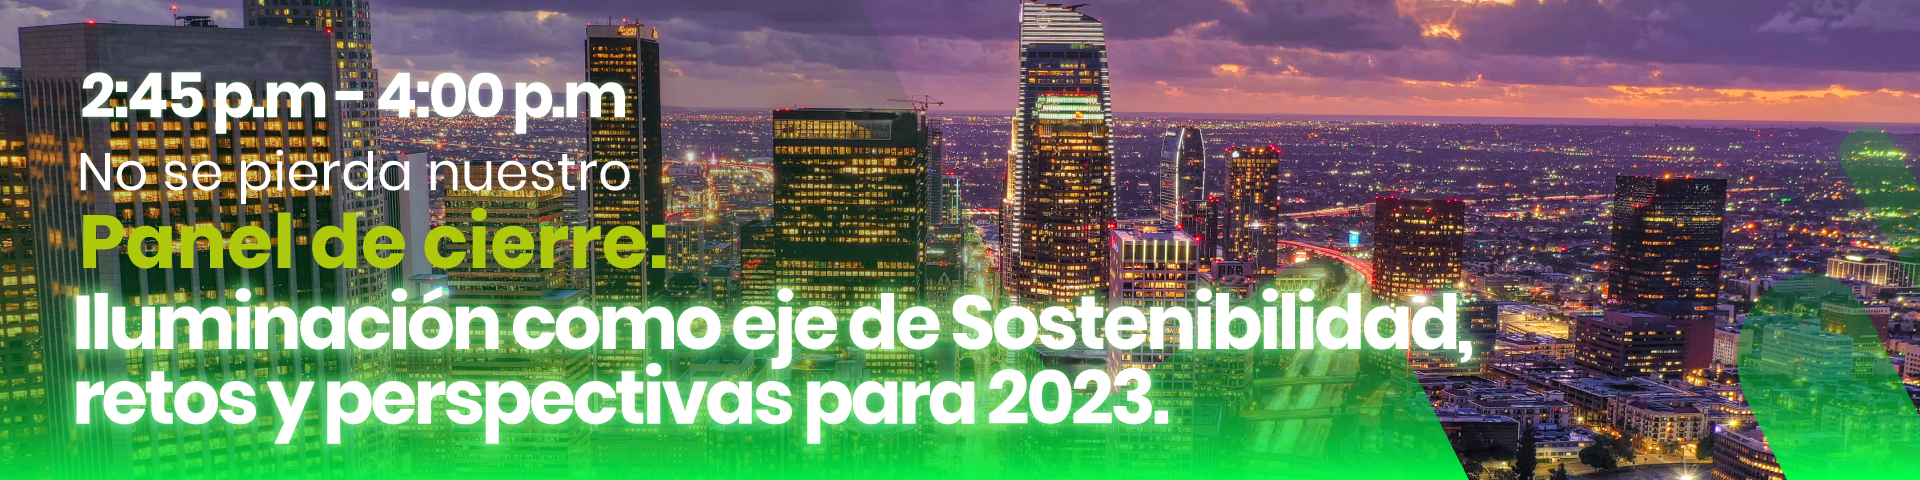 Melexa Lighting Summit 2022